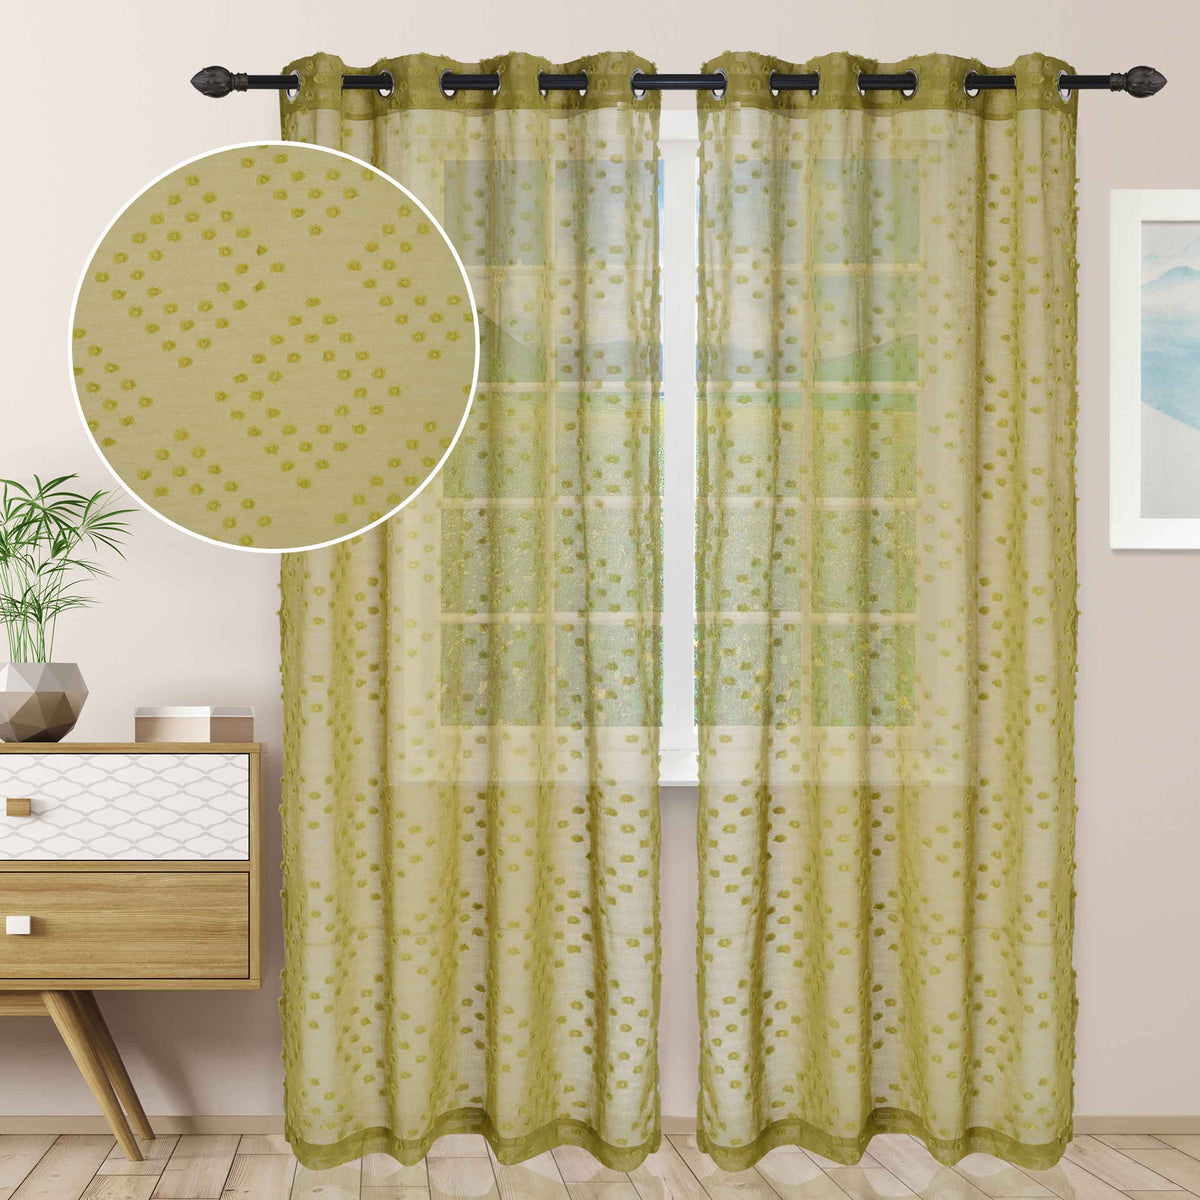  Sheer Poppy Floral Modern Textured Grommet Curtain Panels Set of 2 - LeafGreen